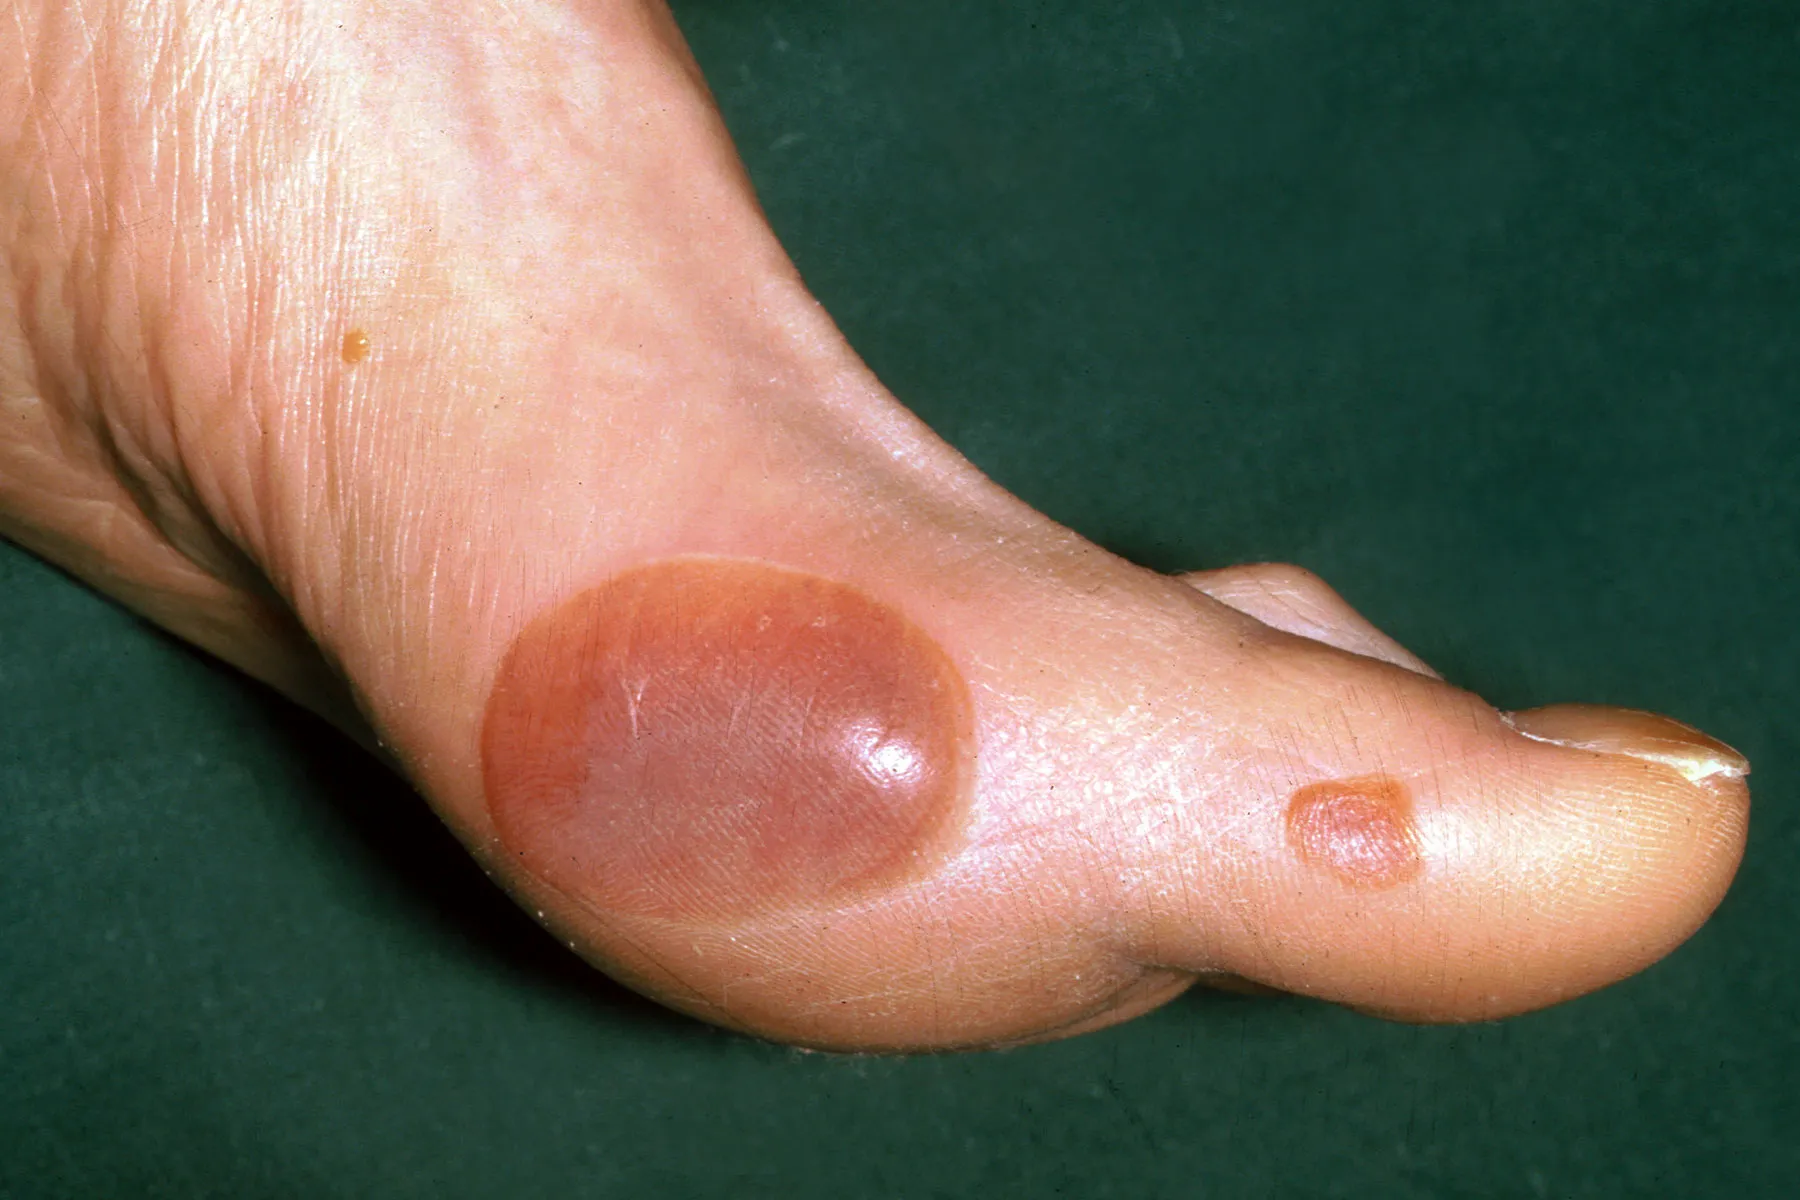 large blister on heel